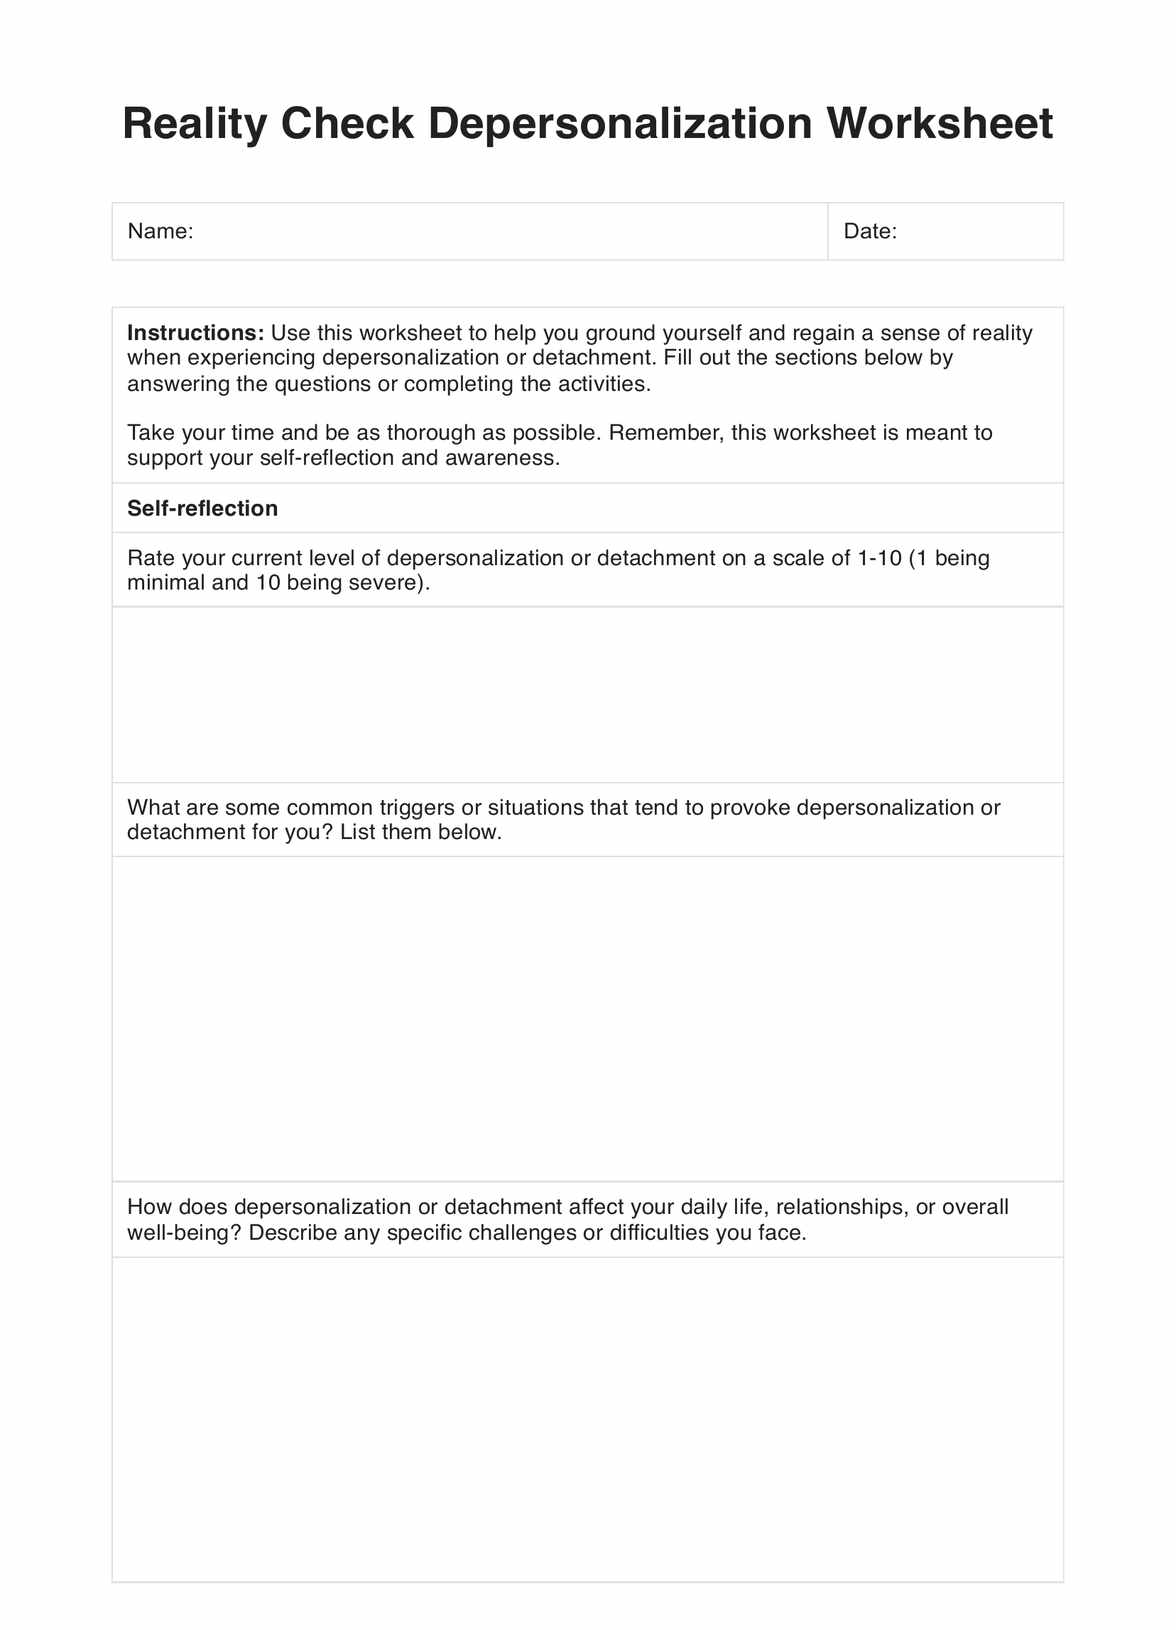 Reality Check Depersonalization Worksheet PDF Example